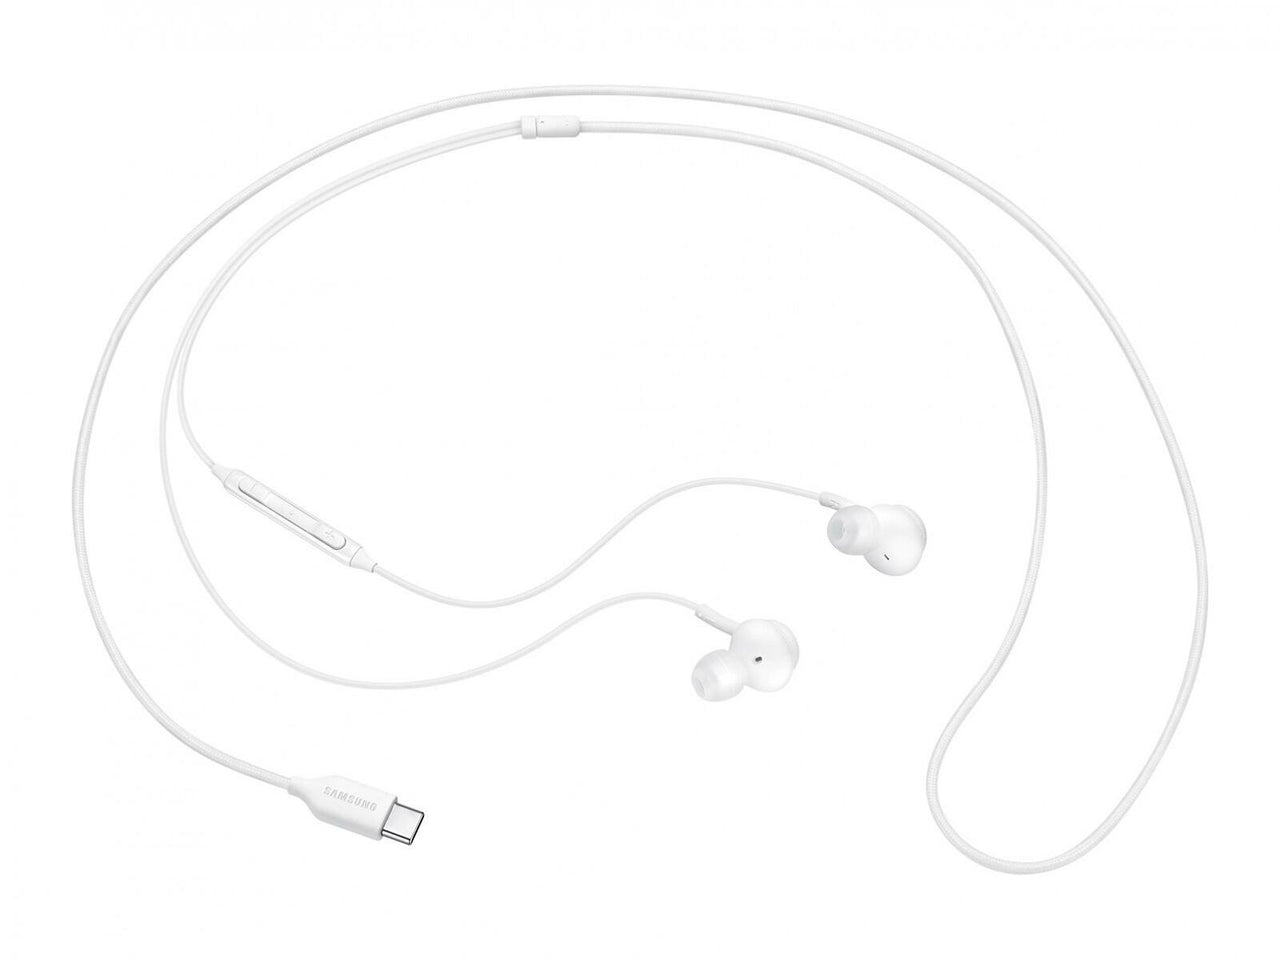 Samsung USB-C  AKG In-Ear Earphone for Samsung USB-C Phones / Tablets - White